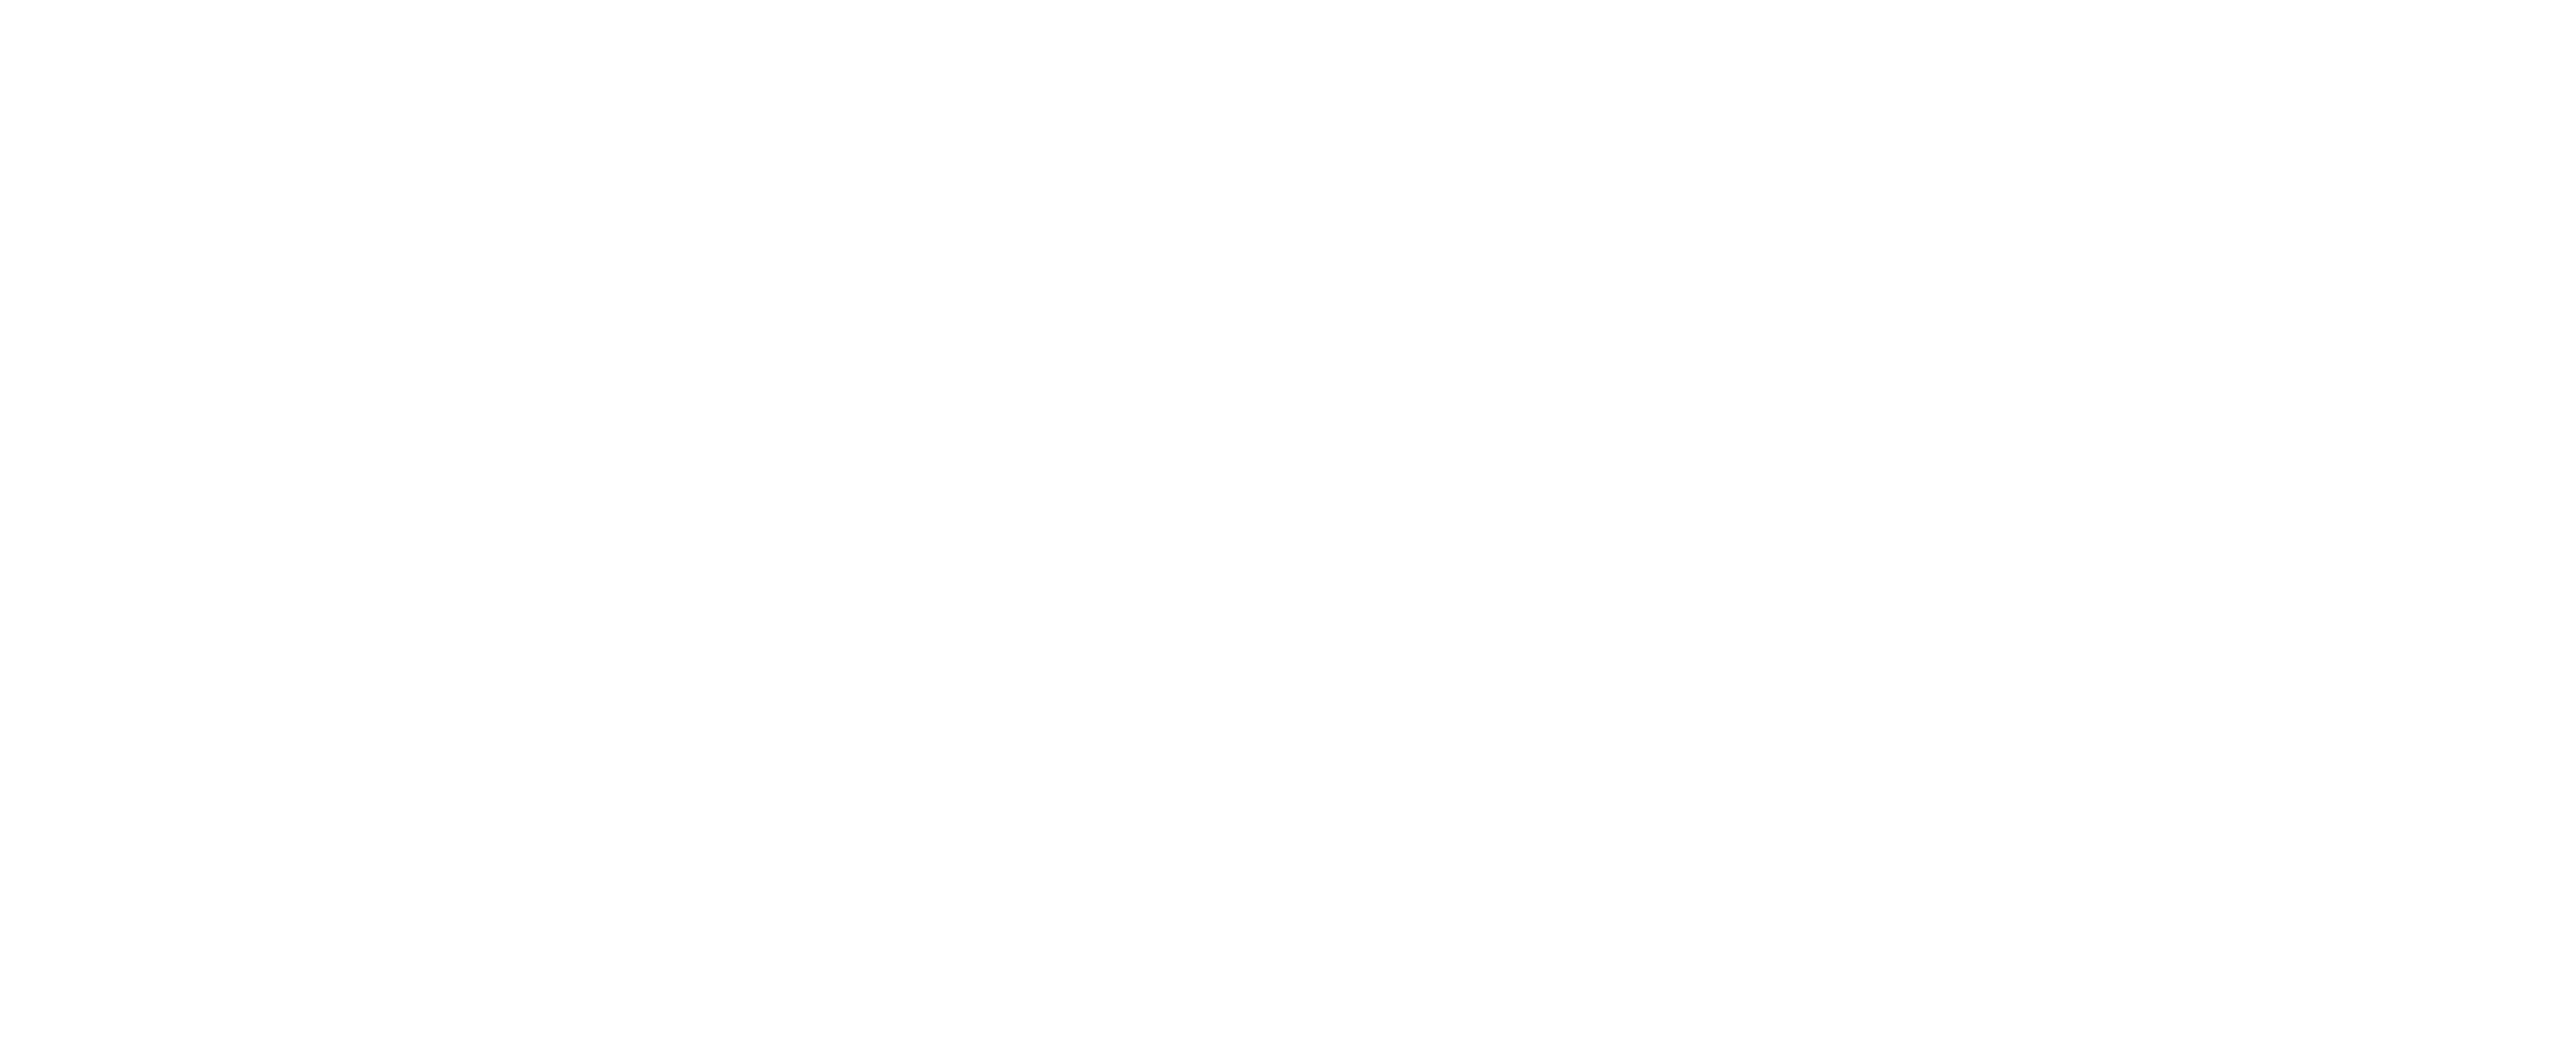 Nanyang Technical University (NTU) logo